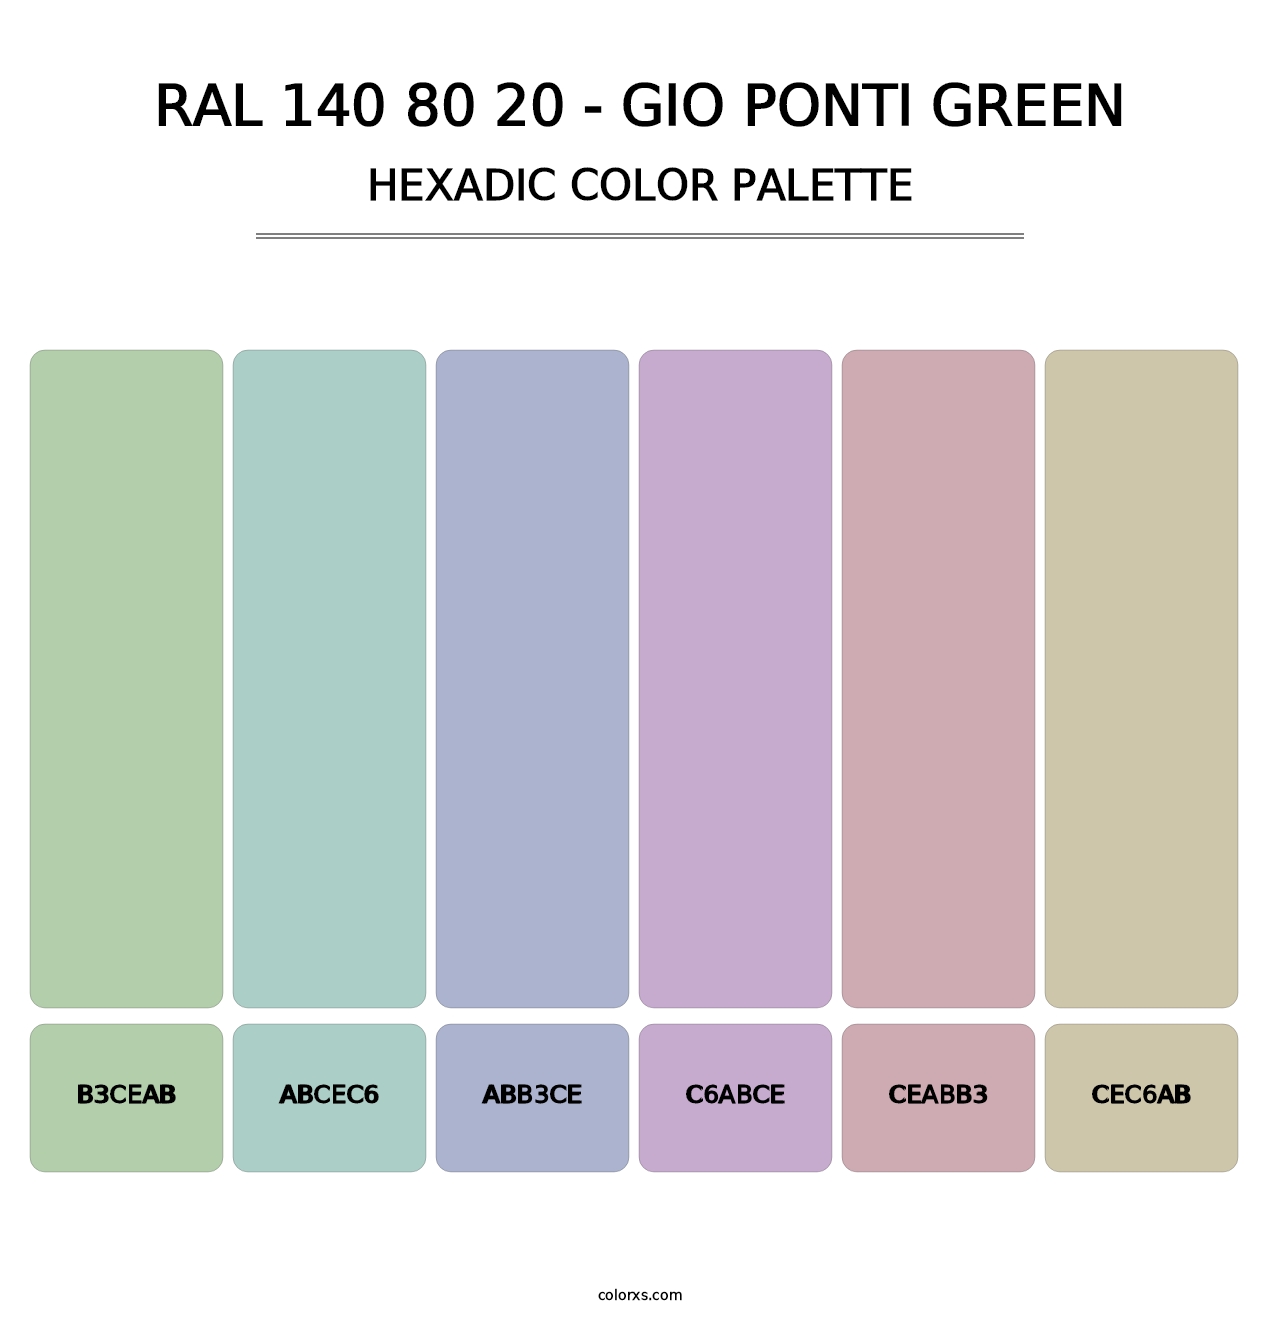 RAL 140 80 20 - Gio Ponti Green - Hexadic Color Palette